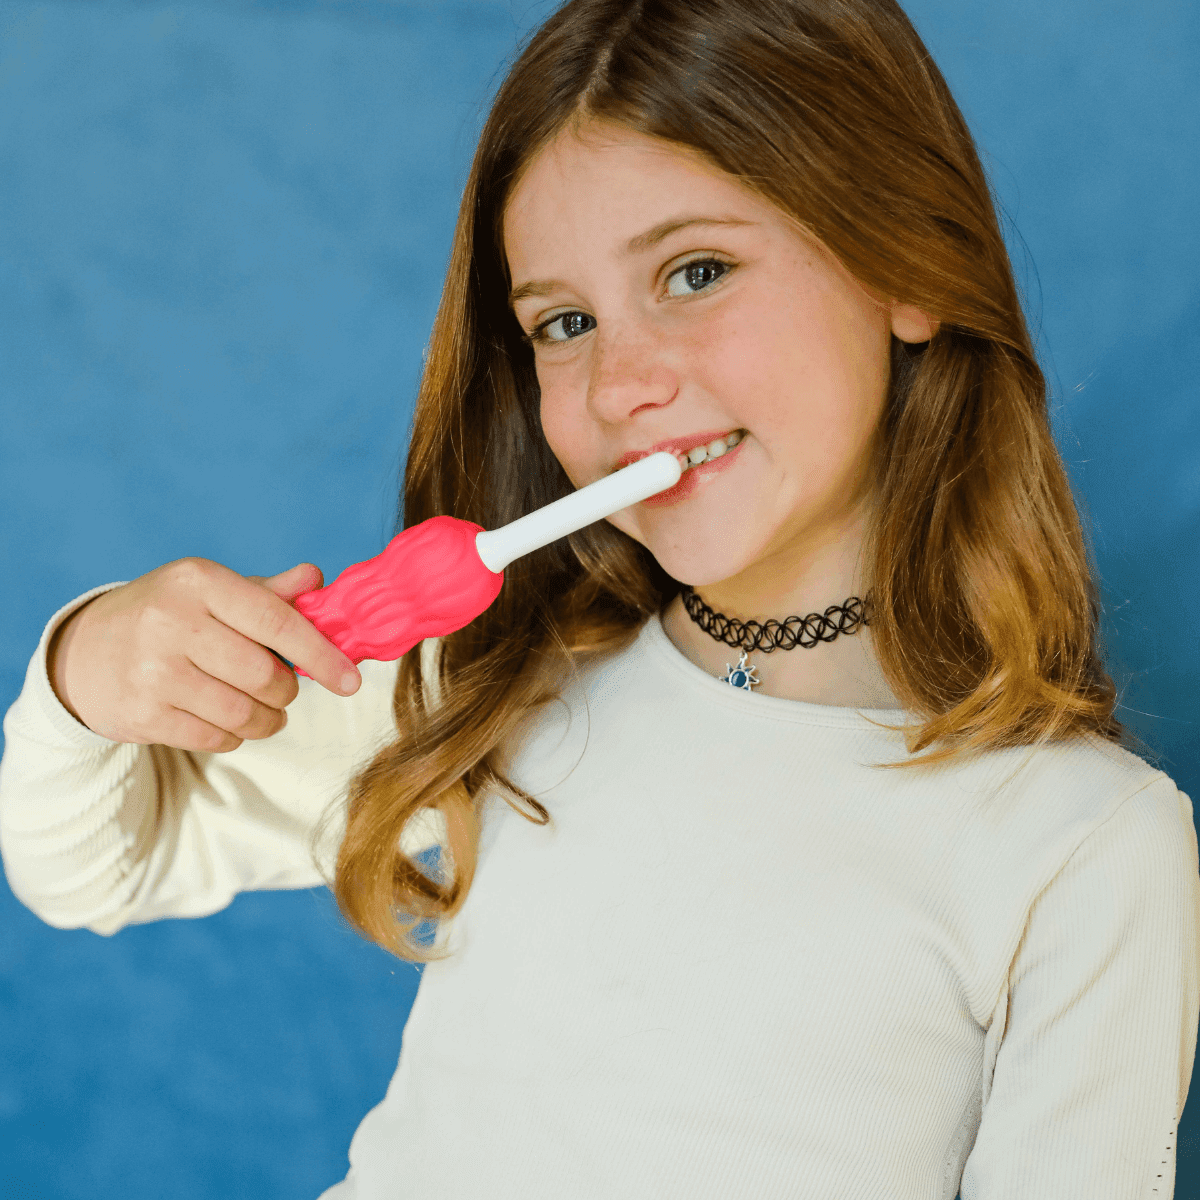 Young girl brushing her teeth using Aqua the Mermaid toothbrush